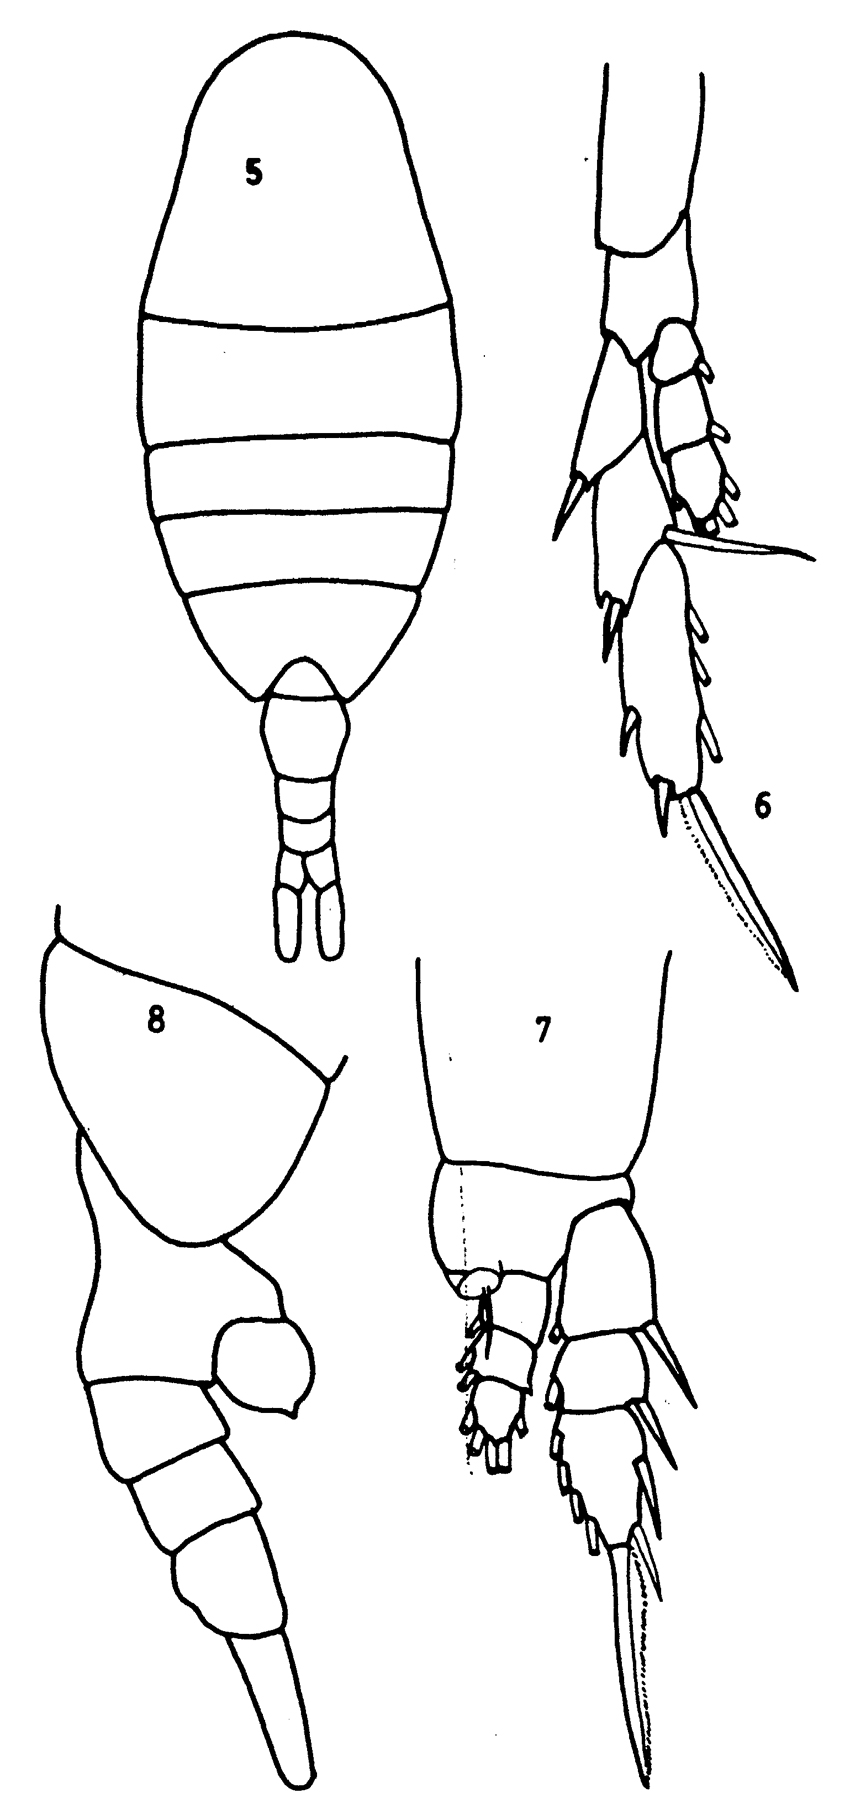 Espce Lucicutia curta - Planche 12 de figures morphologiques